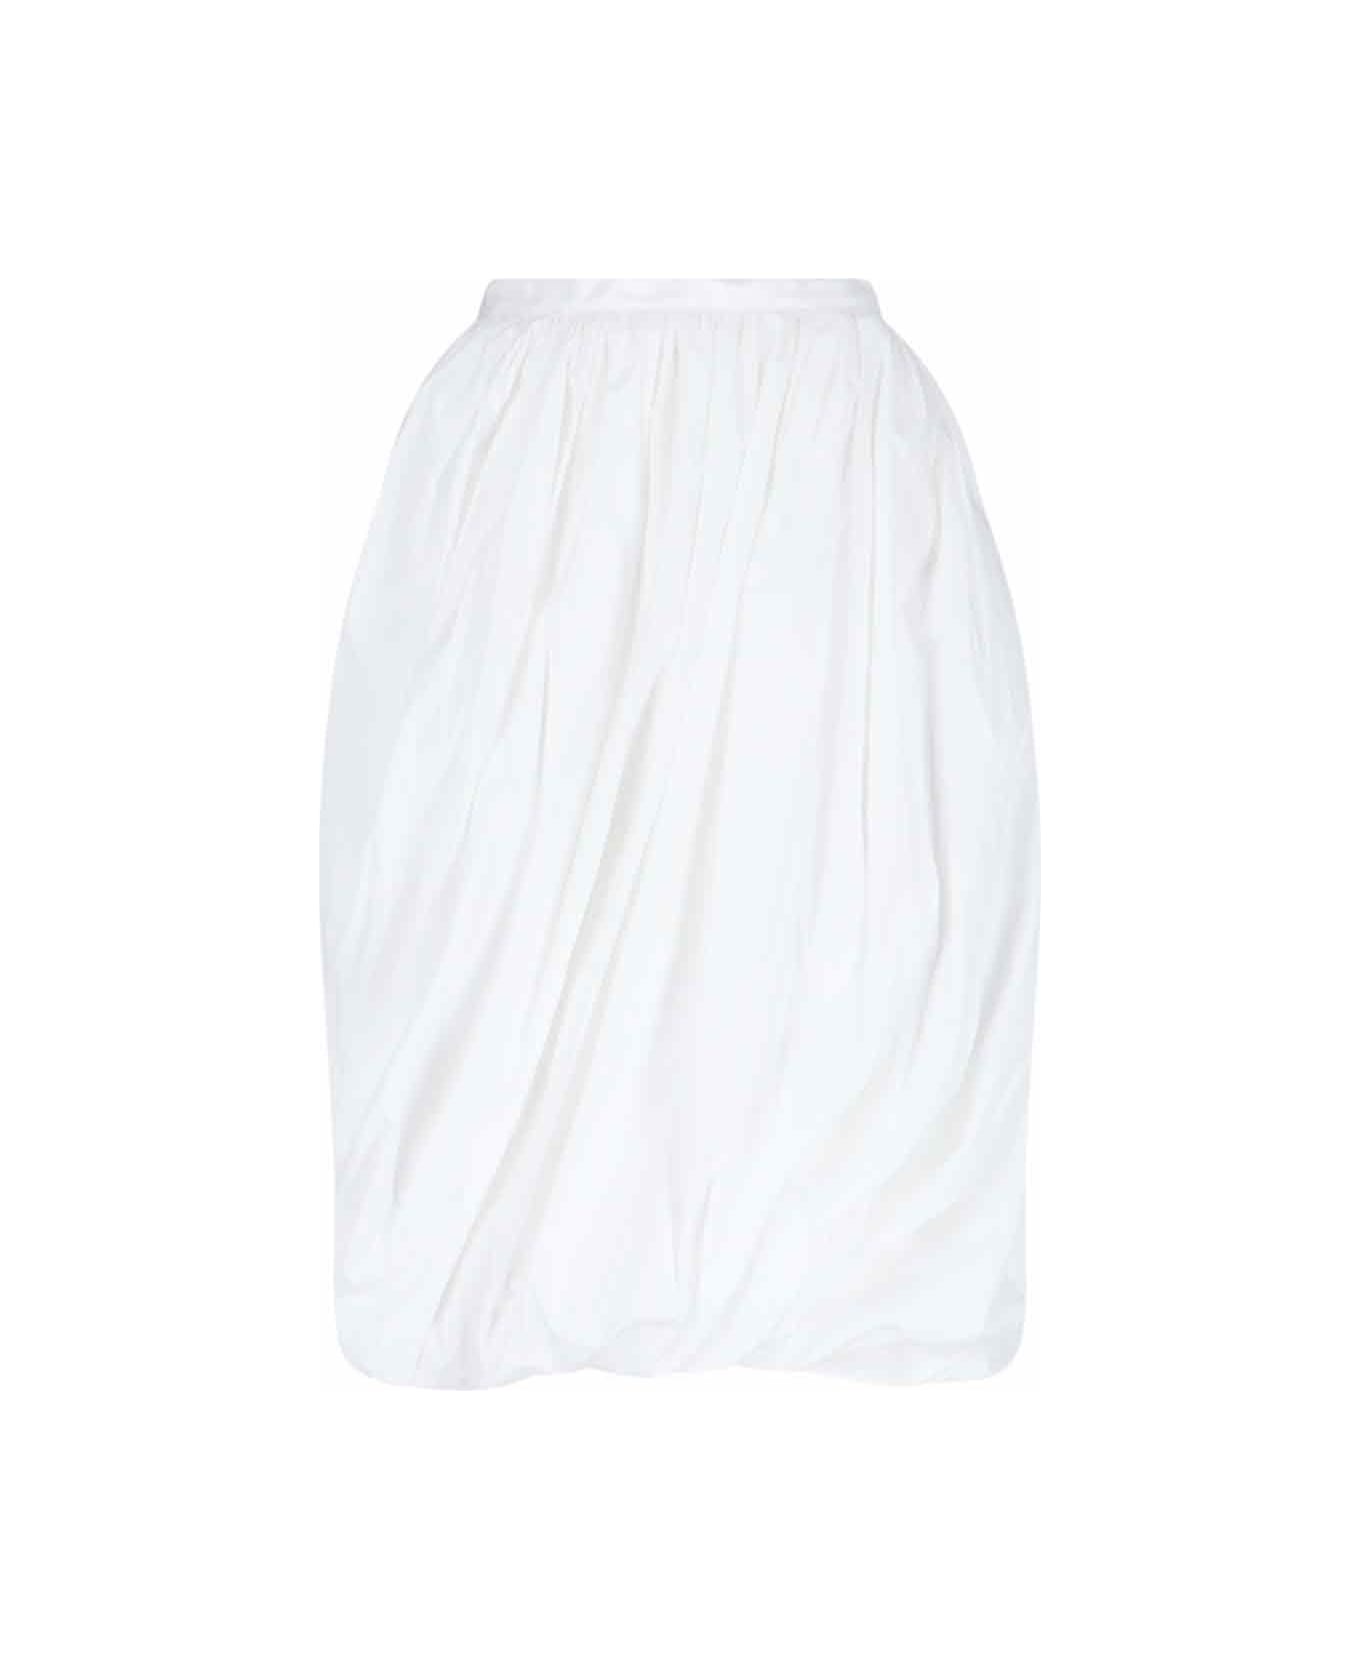 Marni Balloon Midi Skirt - White